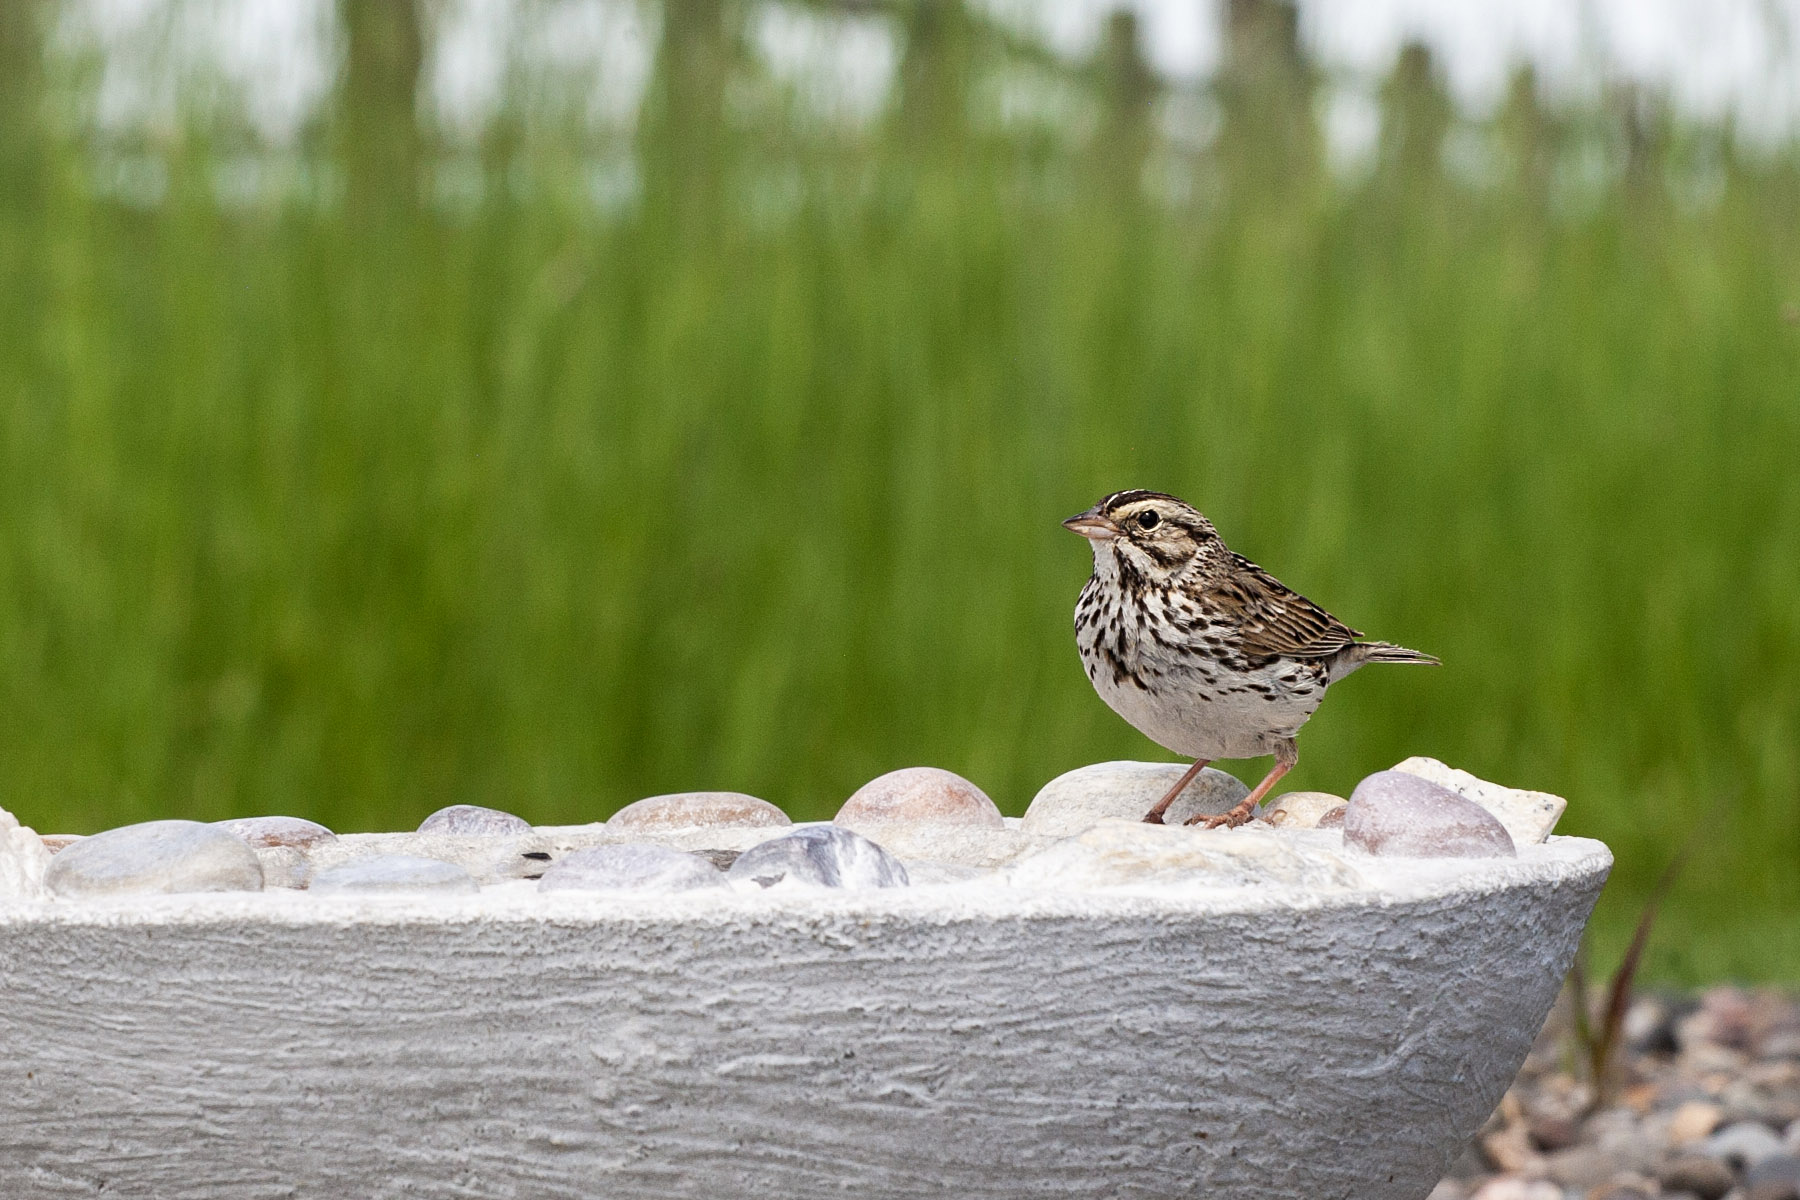 Sparrow at the birdbath, motion trigger.  Click for next photo.